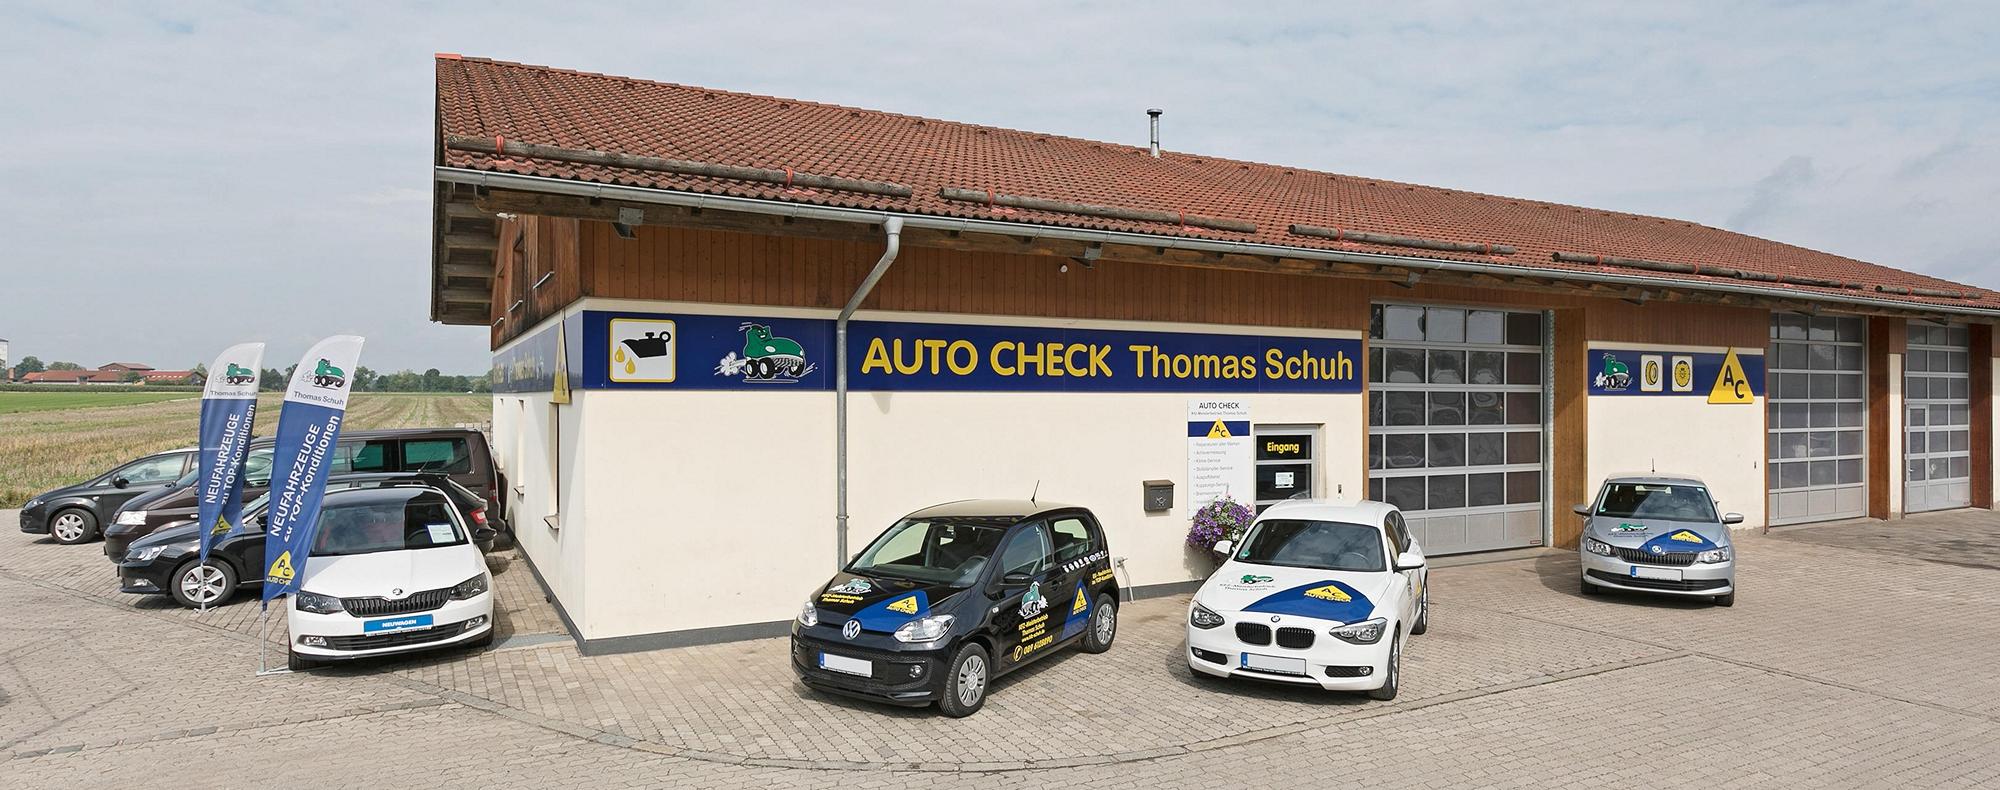 Auto Check Thomas Schuh Kfz-Meisterbetrieb GmbH